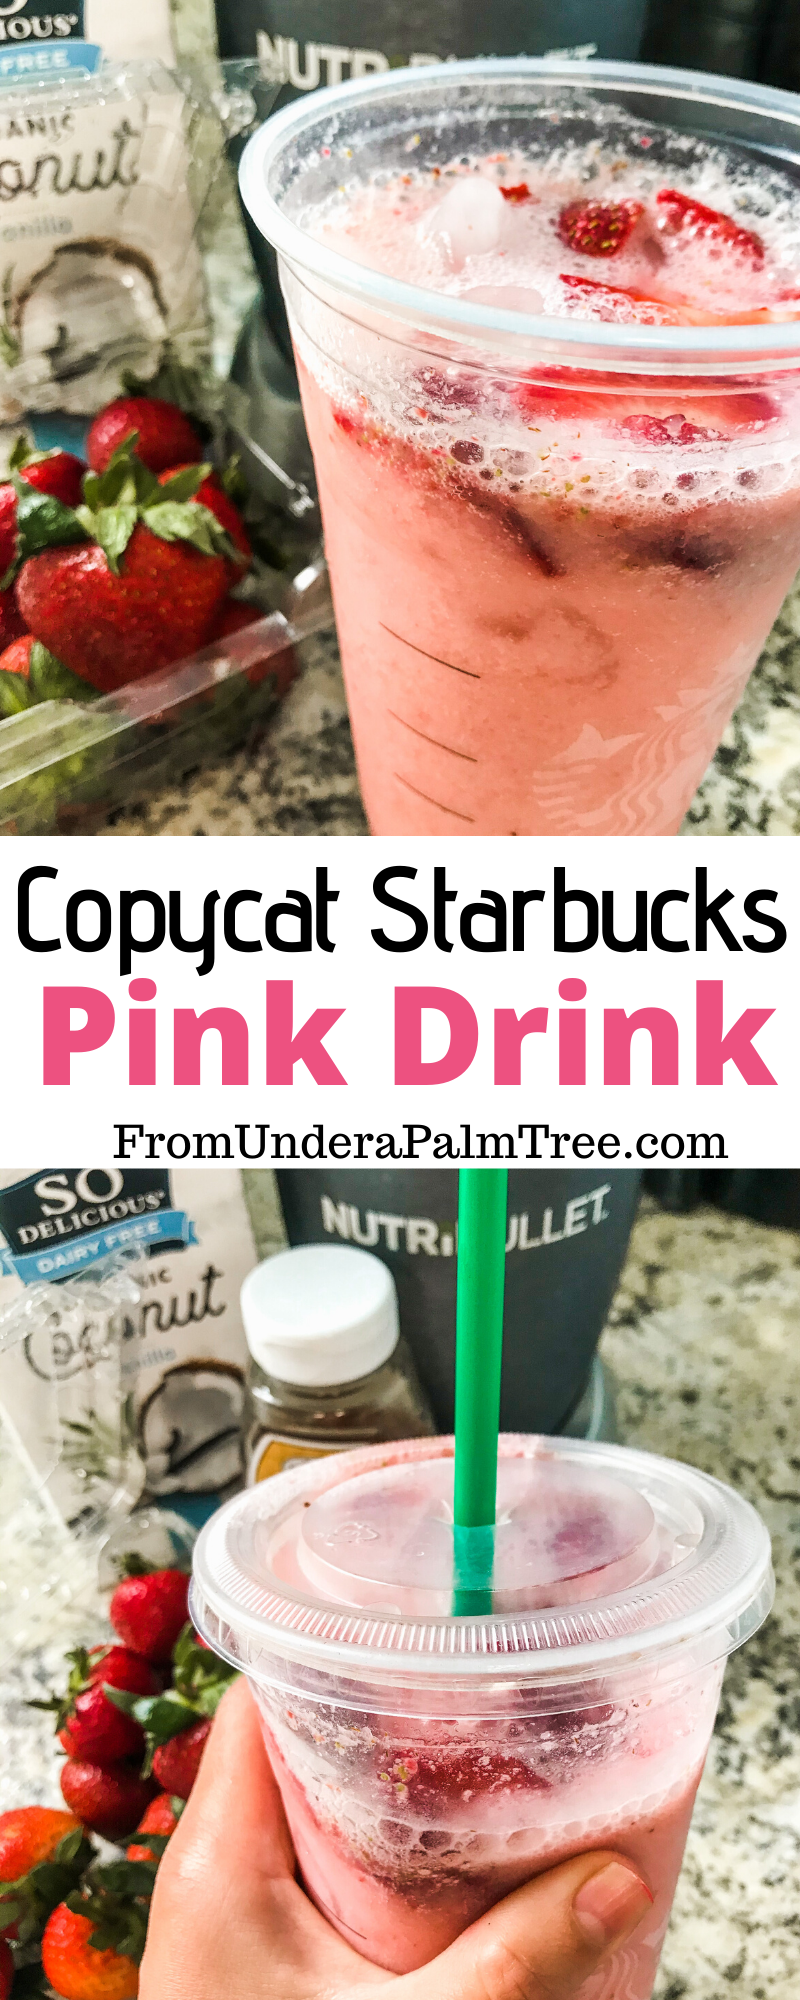 Copycat Starbucks Pink Drink | DIY pink drink | copycat drinks | copycat starbucks drinks | how to make my own pink drink | pink drink recipe | starbucks pink drink recipe | summer drink recipes | summer recipes | Starbucks menu hacks | 